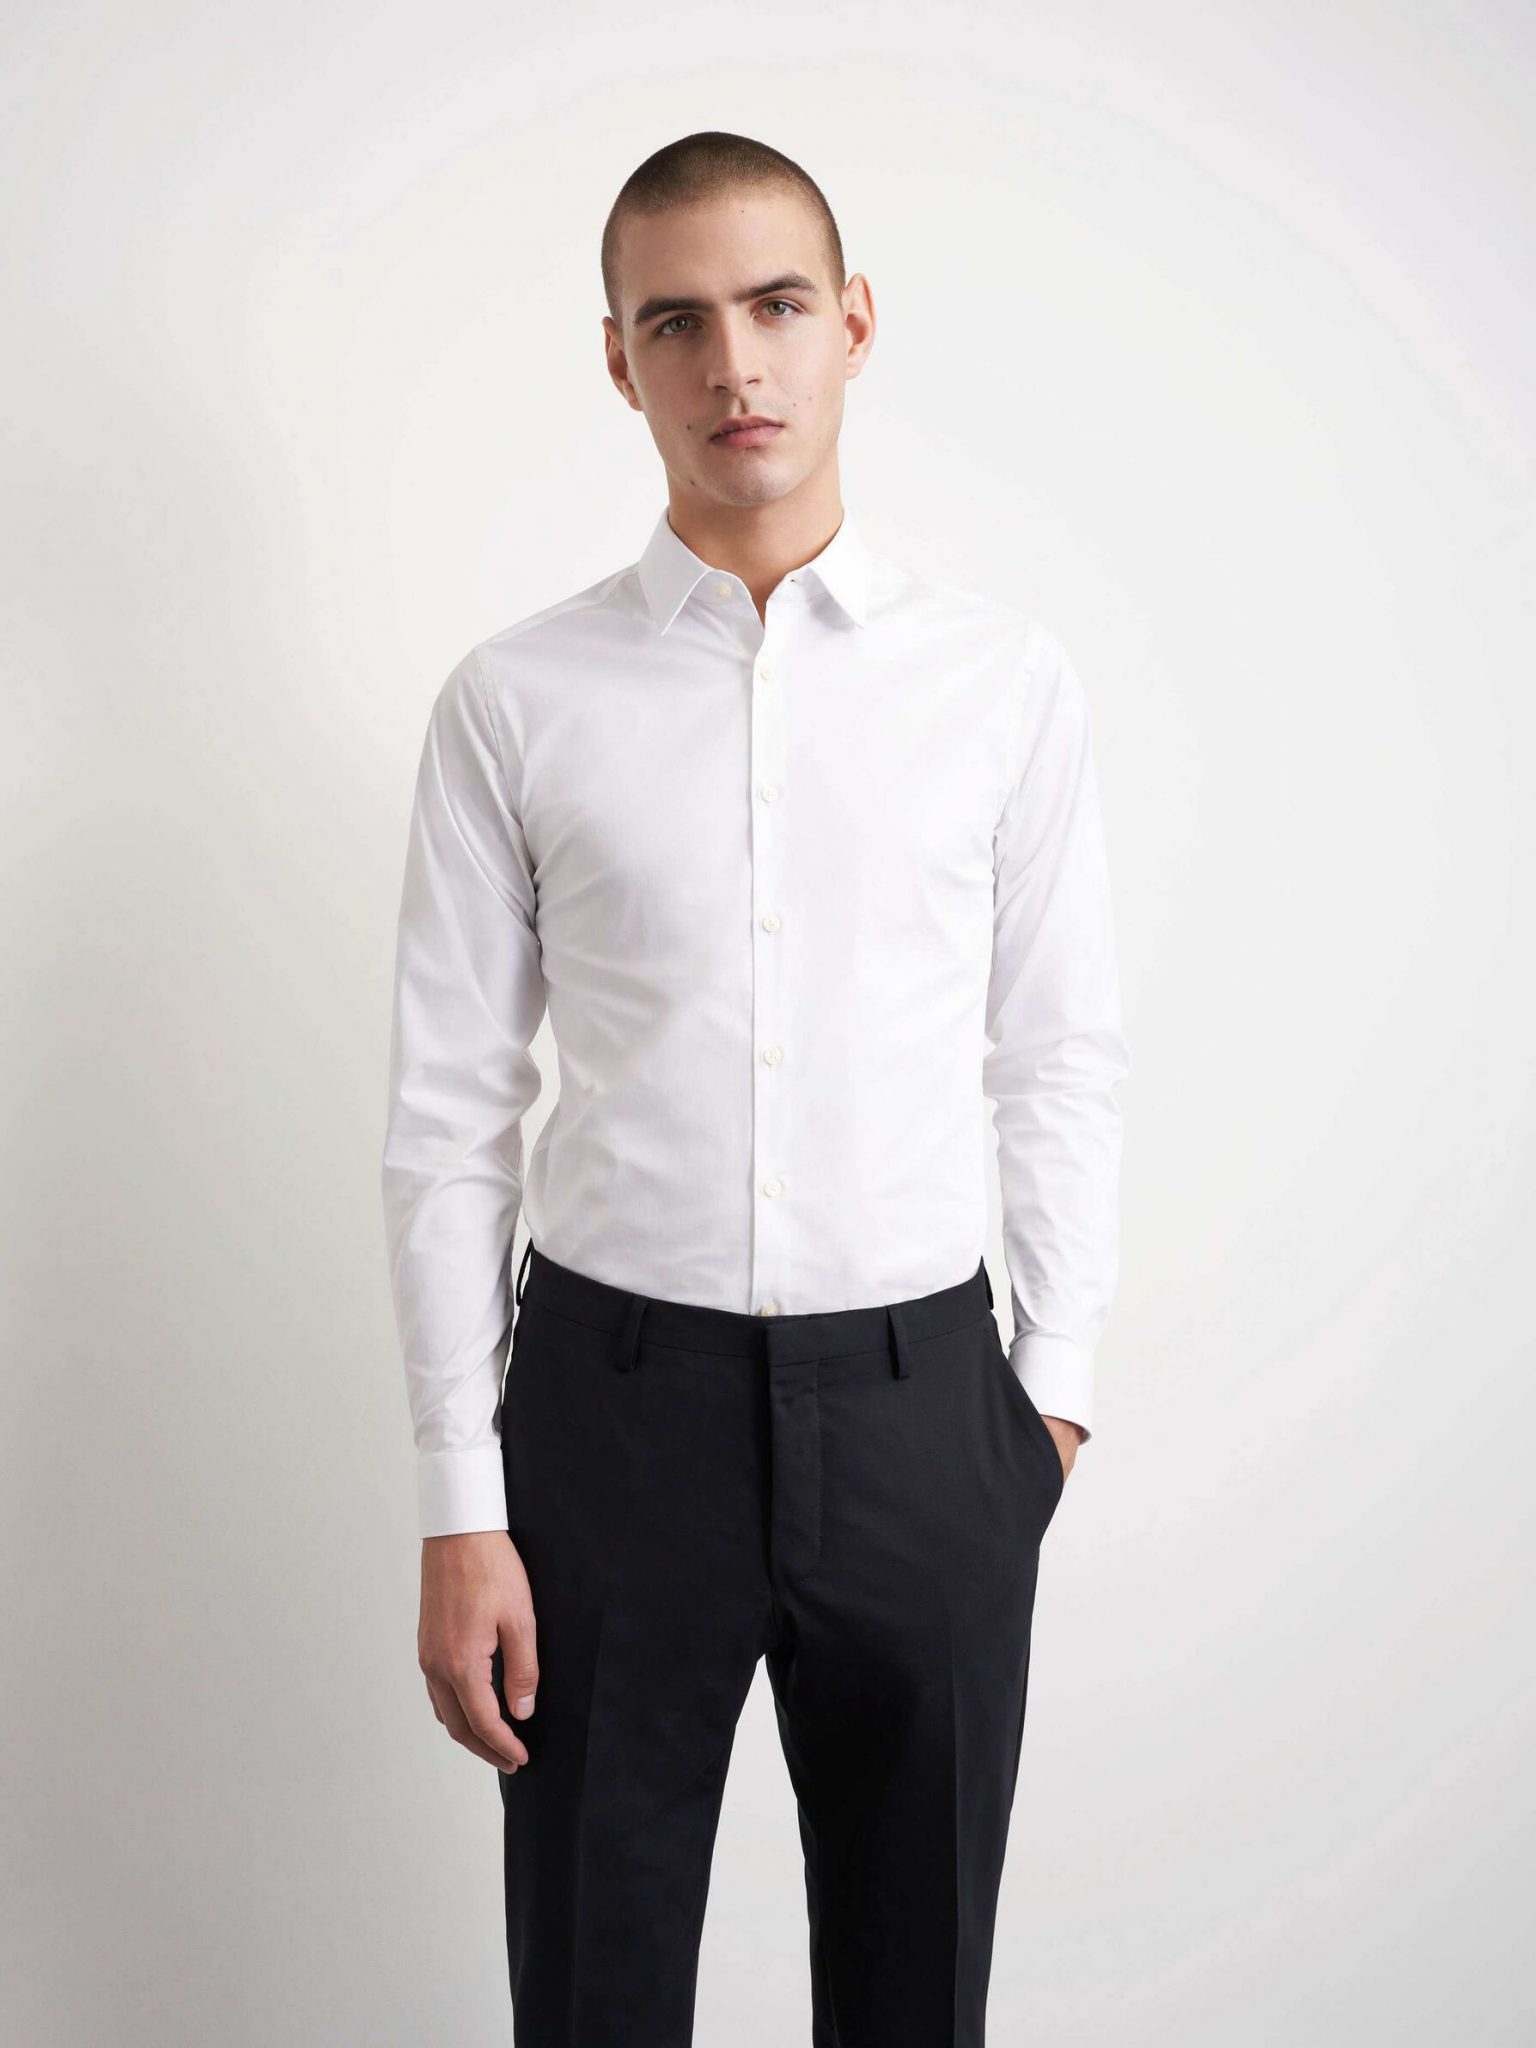 Buy Tiger of Sweden Filbrodie Shirt White - Scandinavian Fashion Store